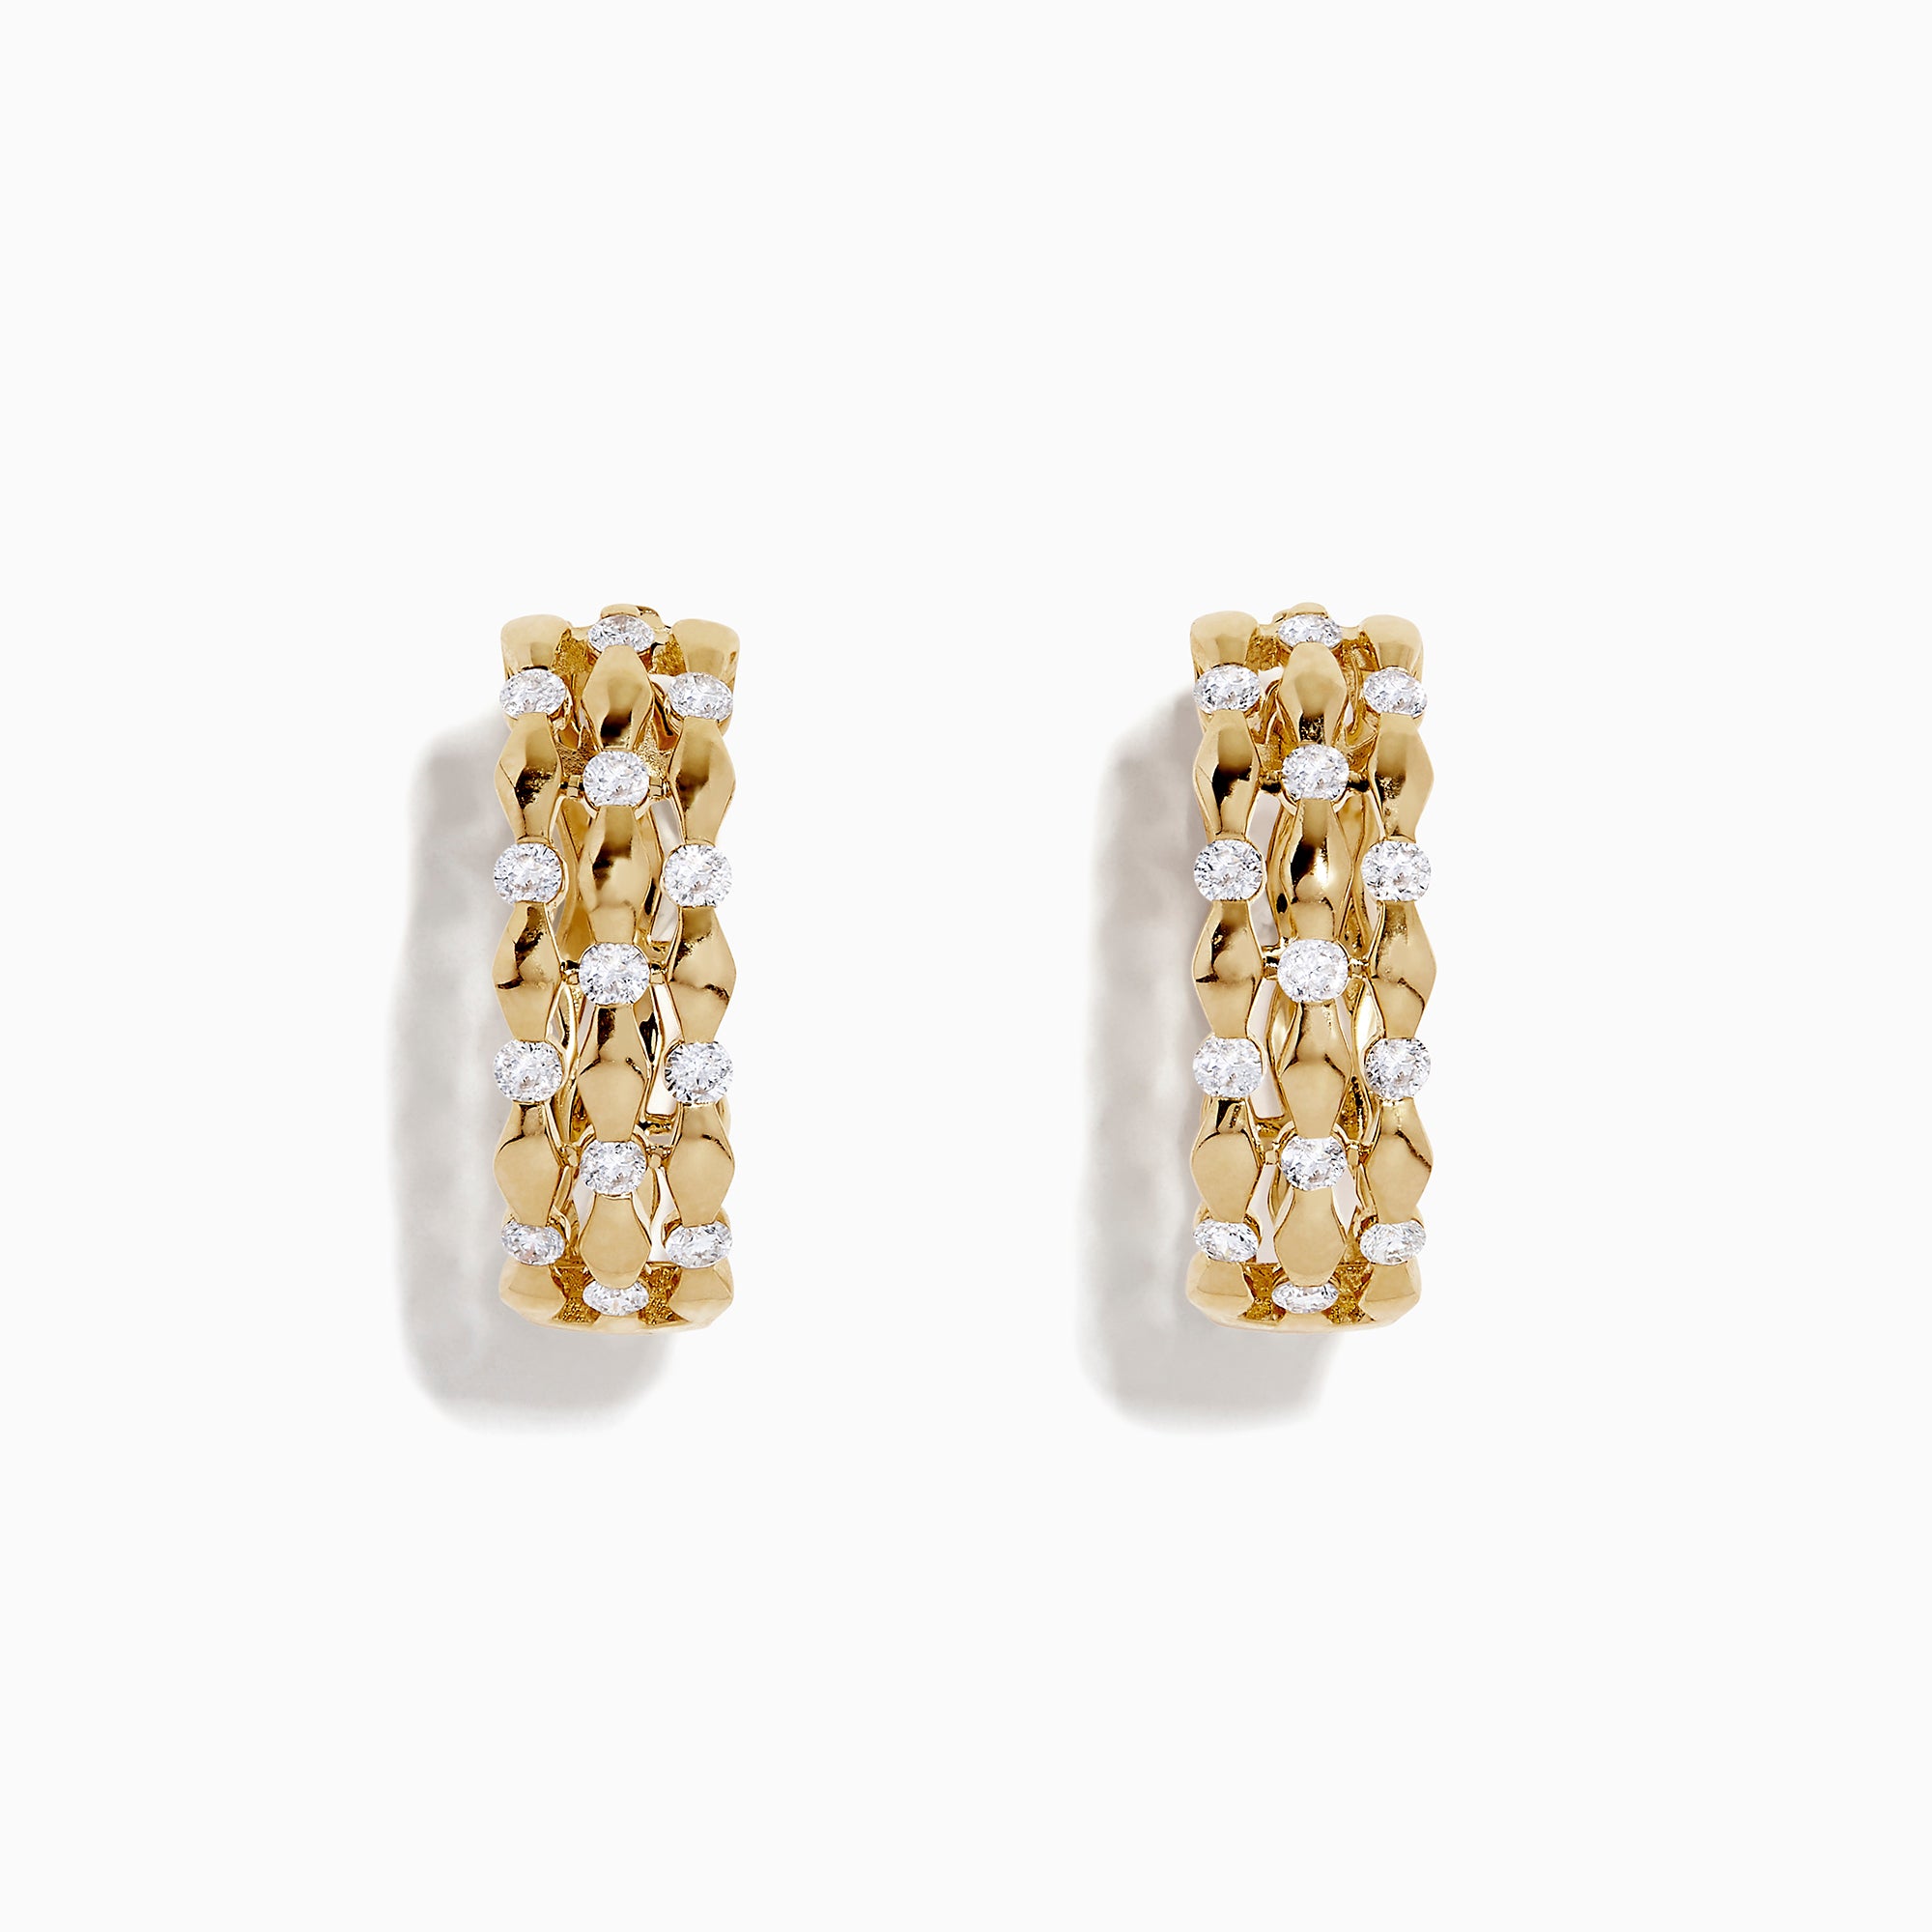 Effy D'Oro 14K Yellow Gold Diamond Huggie Hoop Earrings, 0.76 TCW